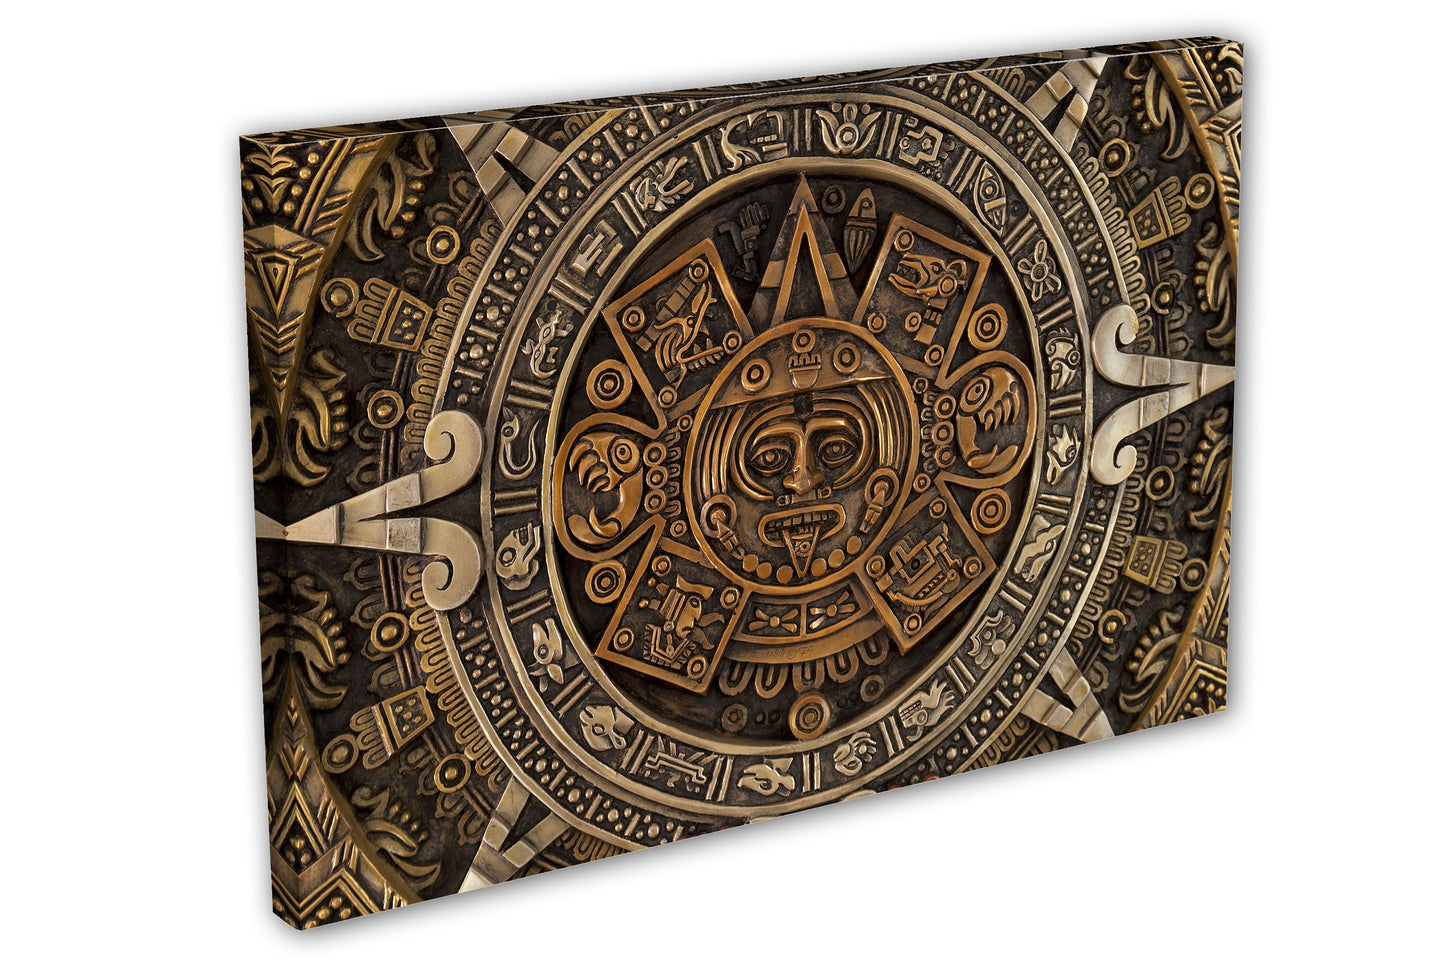 Aztec Calendar Drawing - Canvas Wall Art